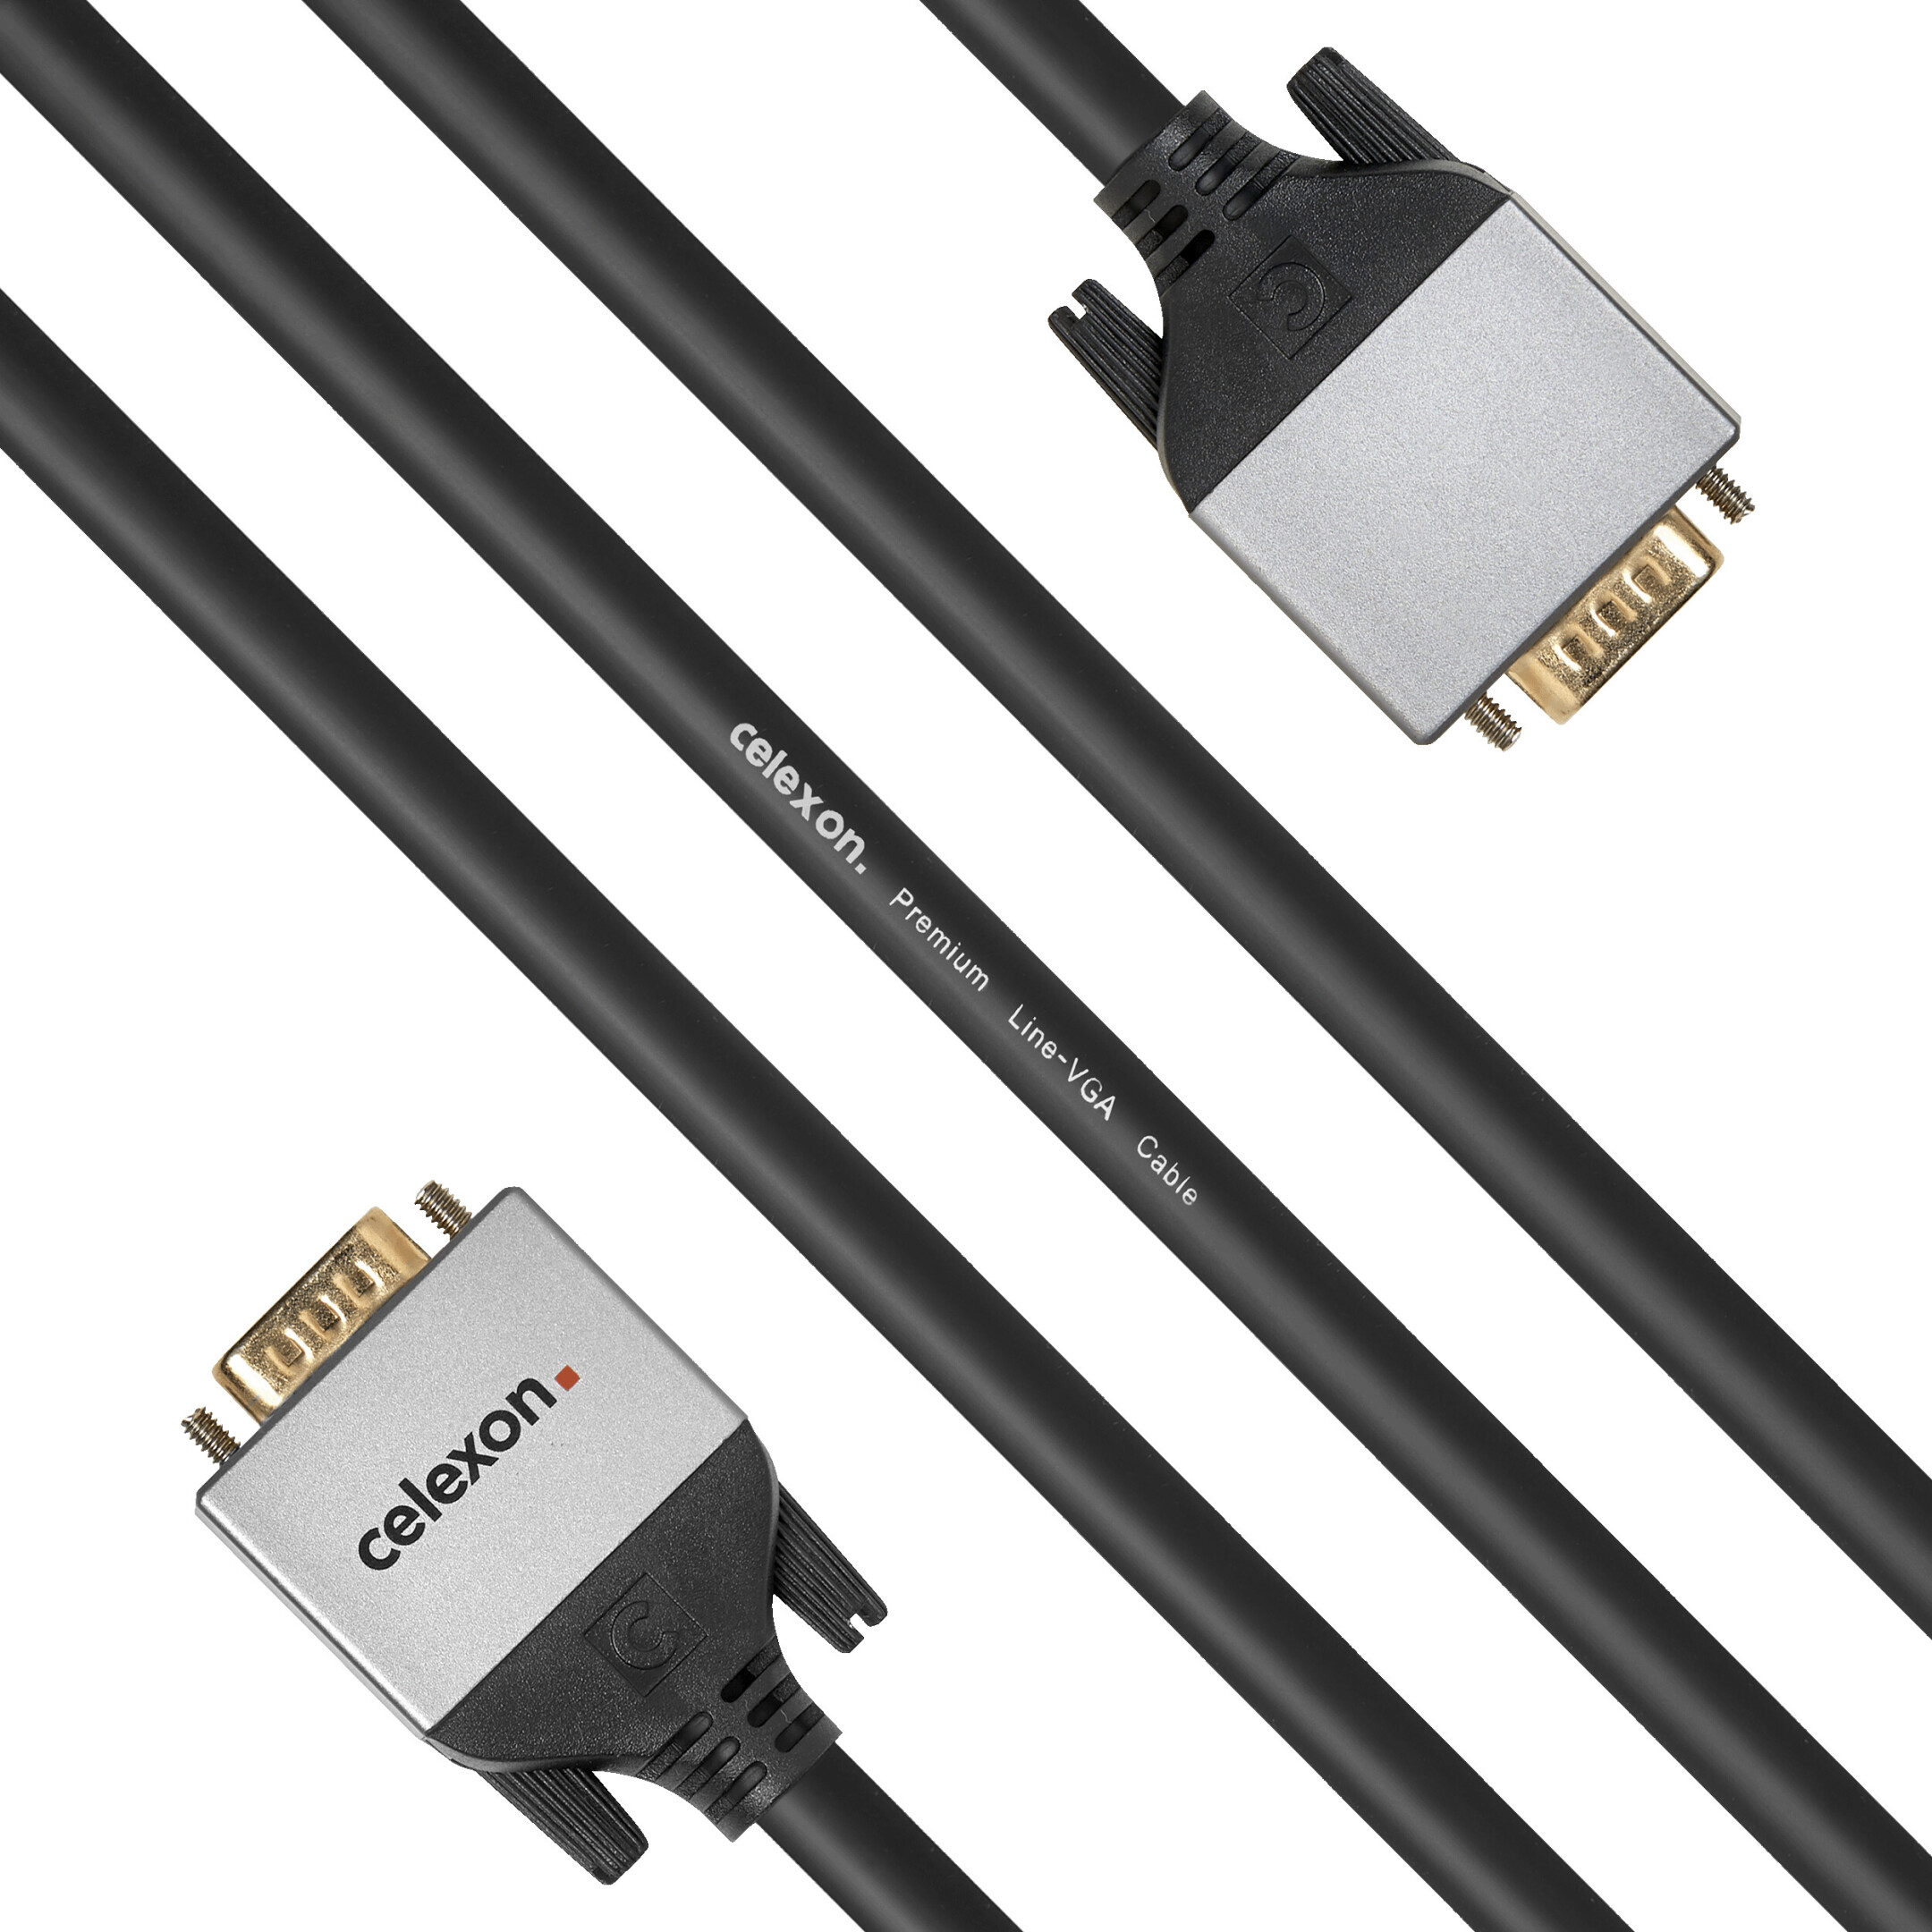 celexon-VGA-Kabel-5-0m-Professional-Line